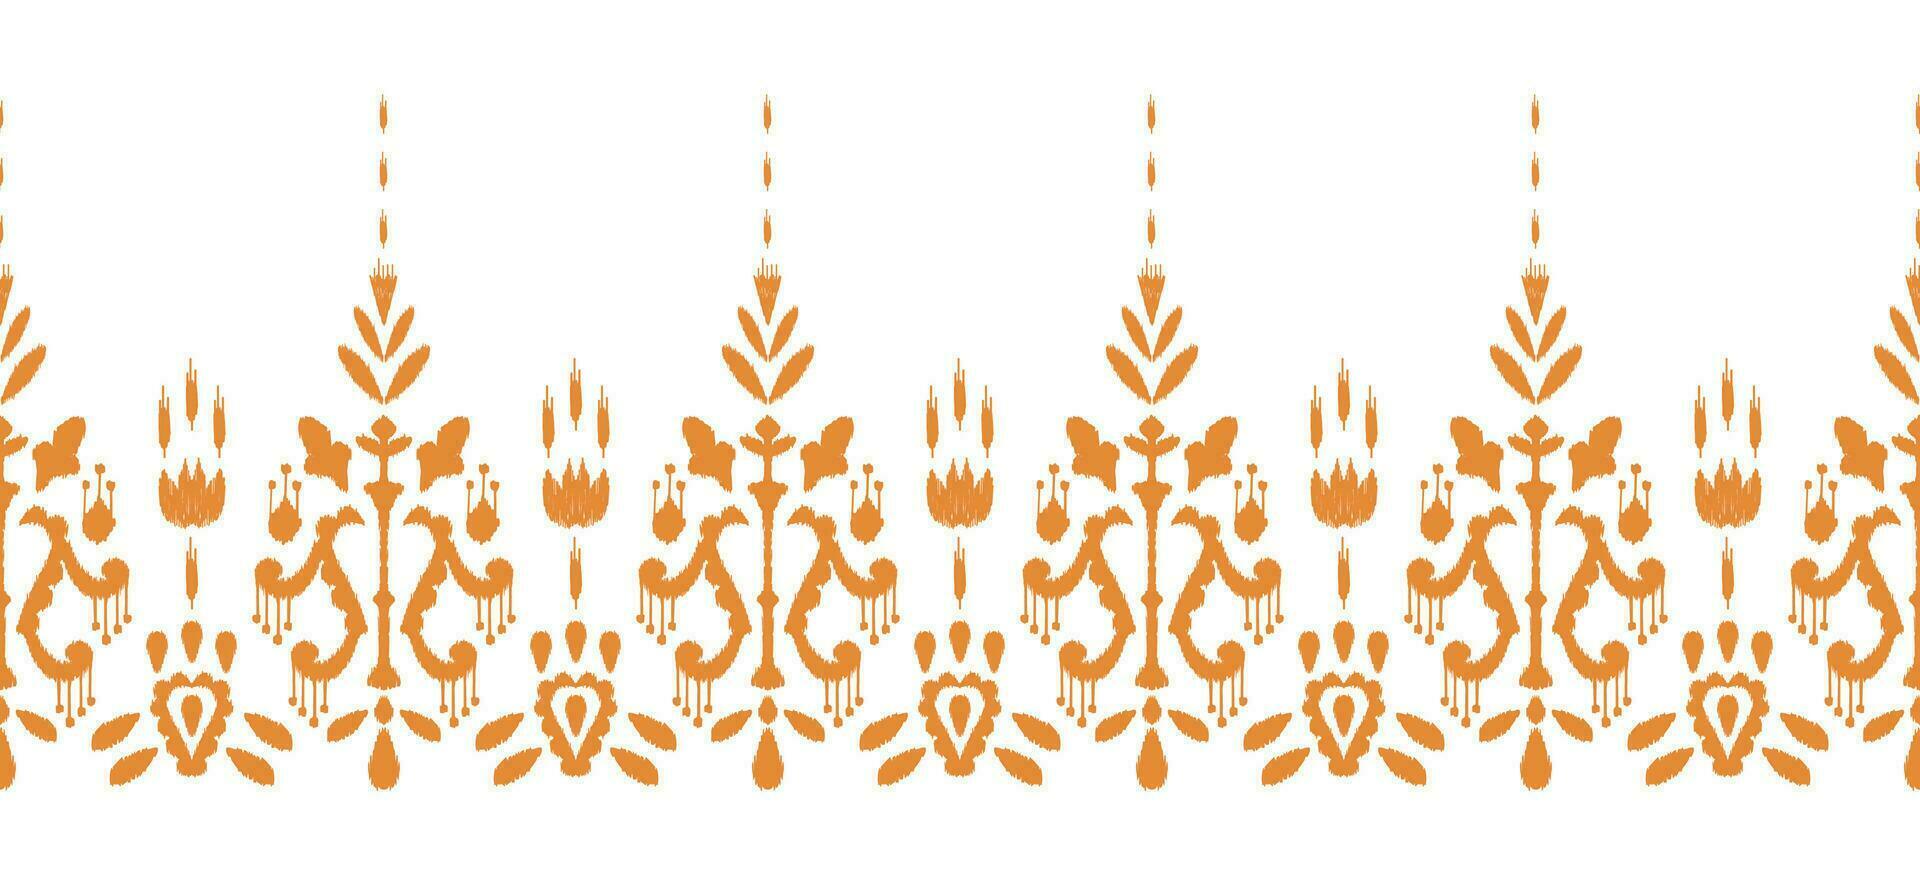 Motif ethnic handmade beautiful Ikat art. Ethnic abstract floral orange background art. folk embroidery, Peruvian, Indian, Asia, Moroccan, Turkey, and Uzbek style. Aztec geometric art ornament print. vector